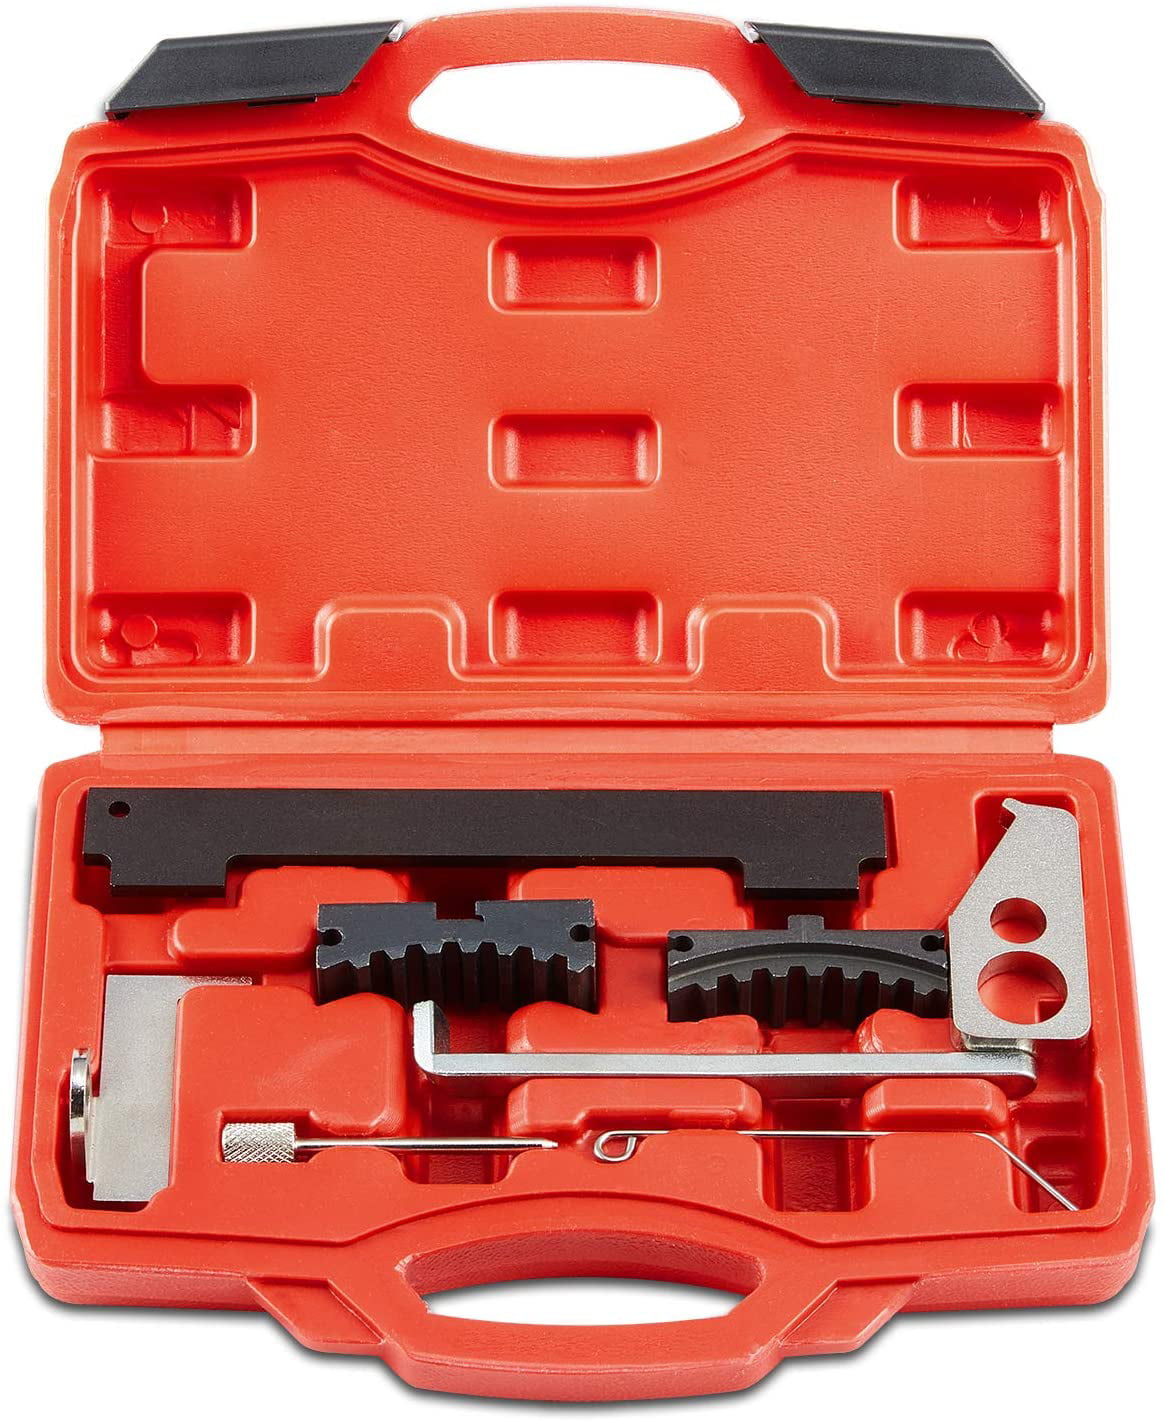 Joytube Timing Belt Tool Engine Camshaft Tensioning Locking Alignment Timing Tool Kit Compatible with Cruze Aveo Alfa 159 16V 1.4 1.6 1.8 en6340 